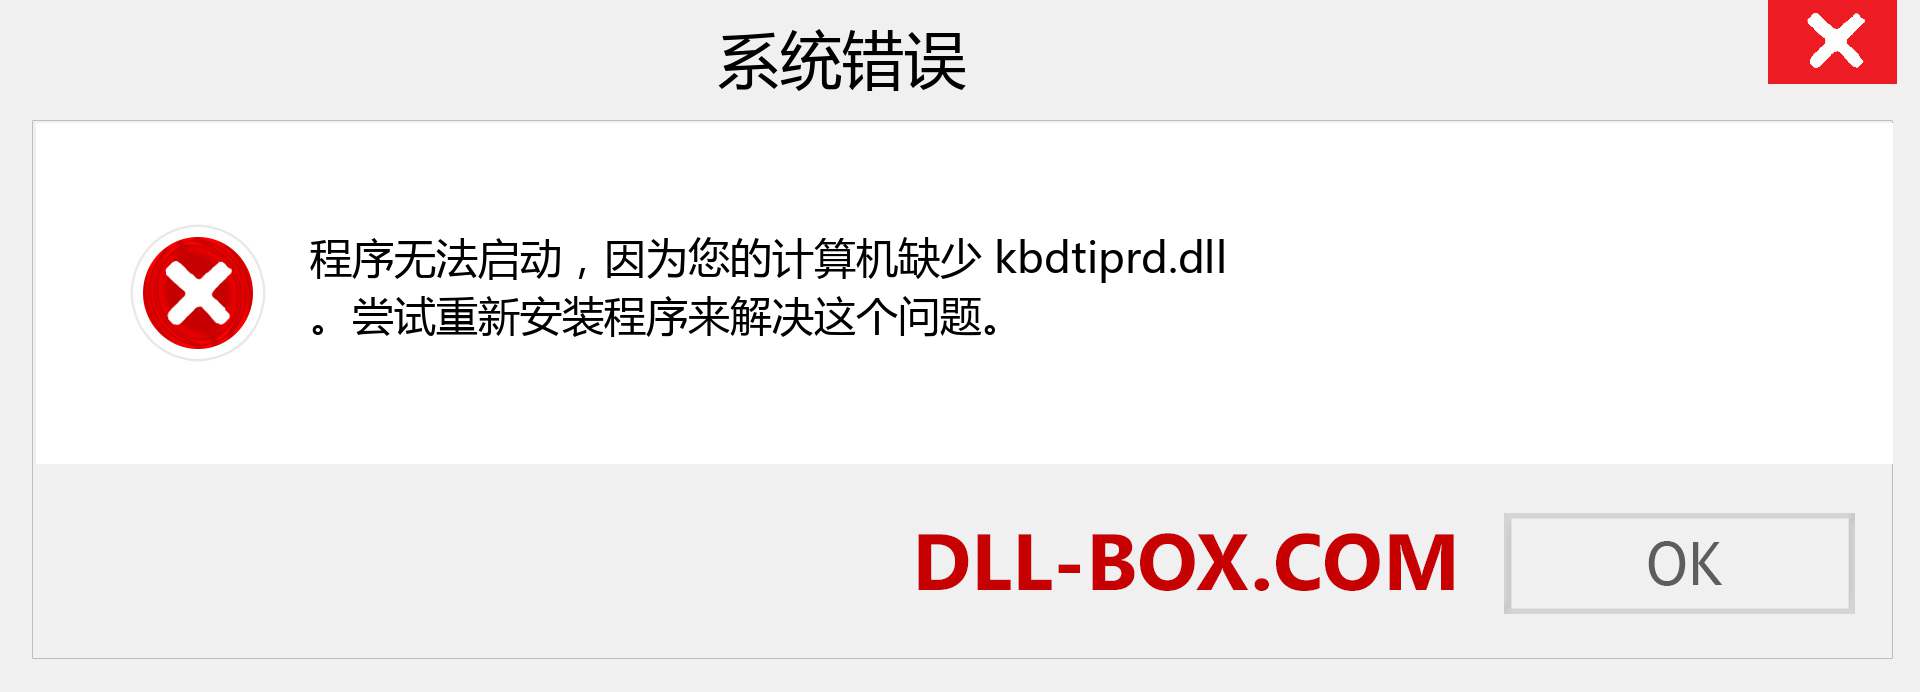 kbdtiprd.dll 文件丢失？。 适用于 Windows 7、8、10 的下载 - 修复 Windows、照片、图像上的 kbdtiprd dll 丢失错误